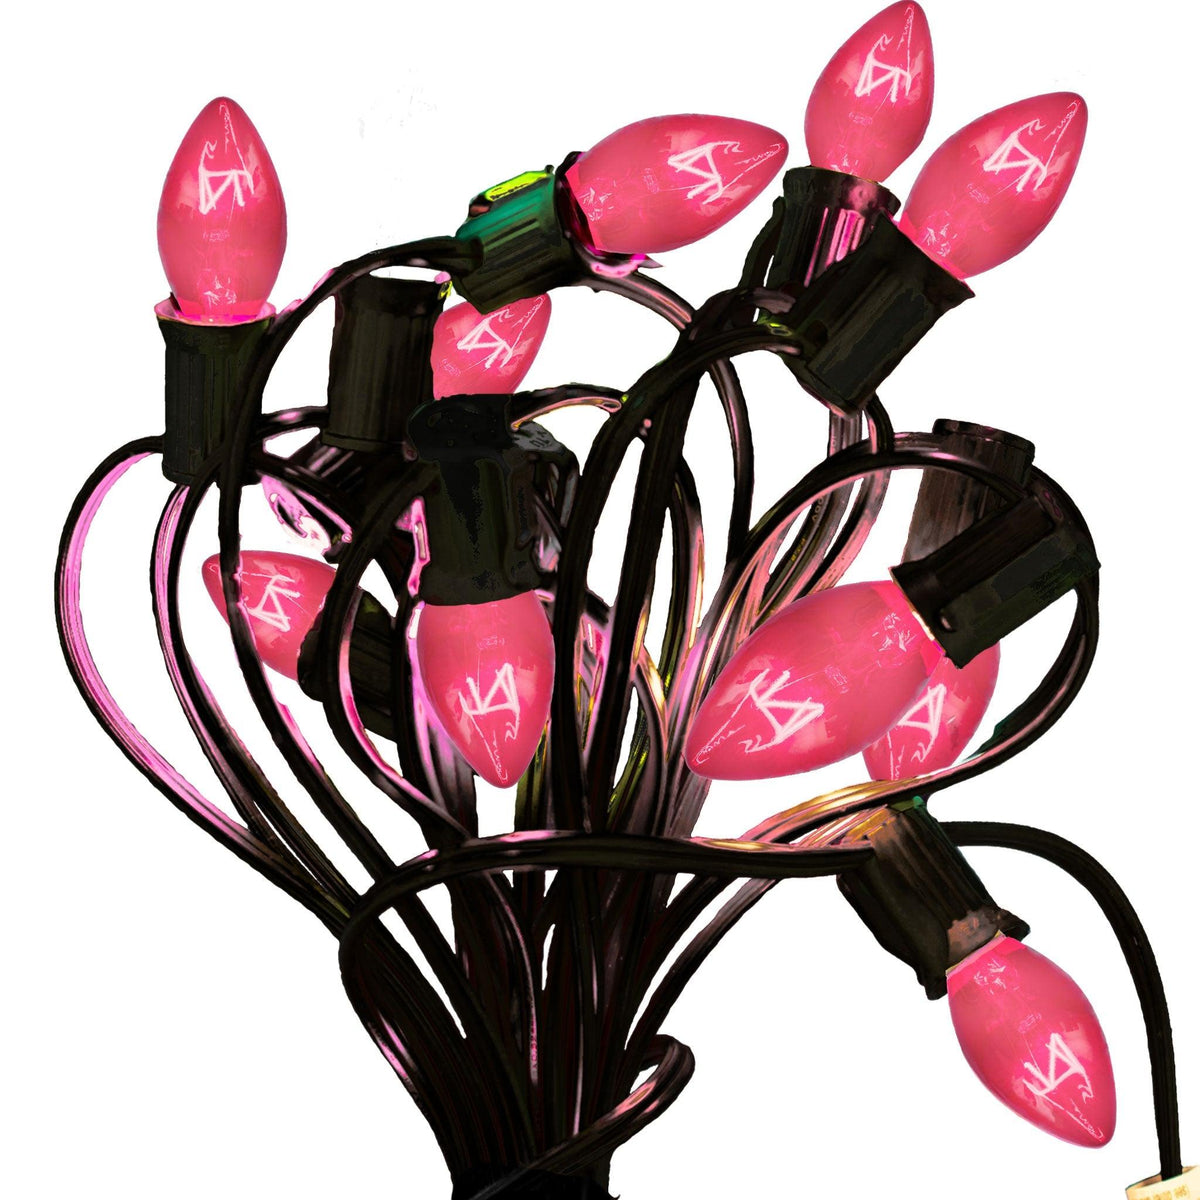 25FT Pink Magnetic Outdoor String Lighting Set on sale at leedisplay.com